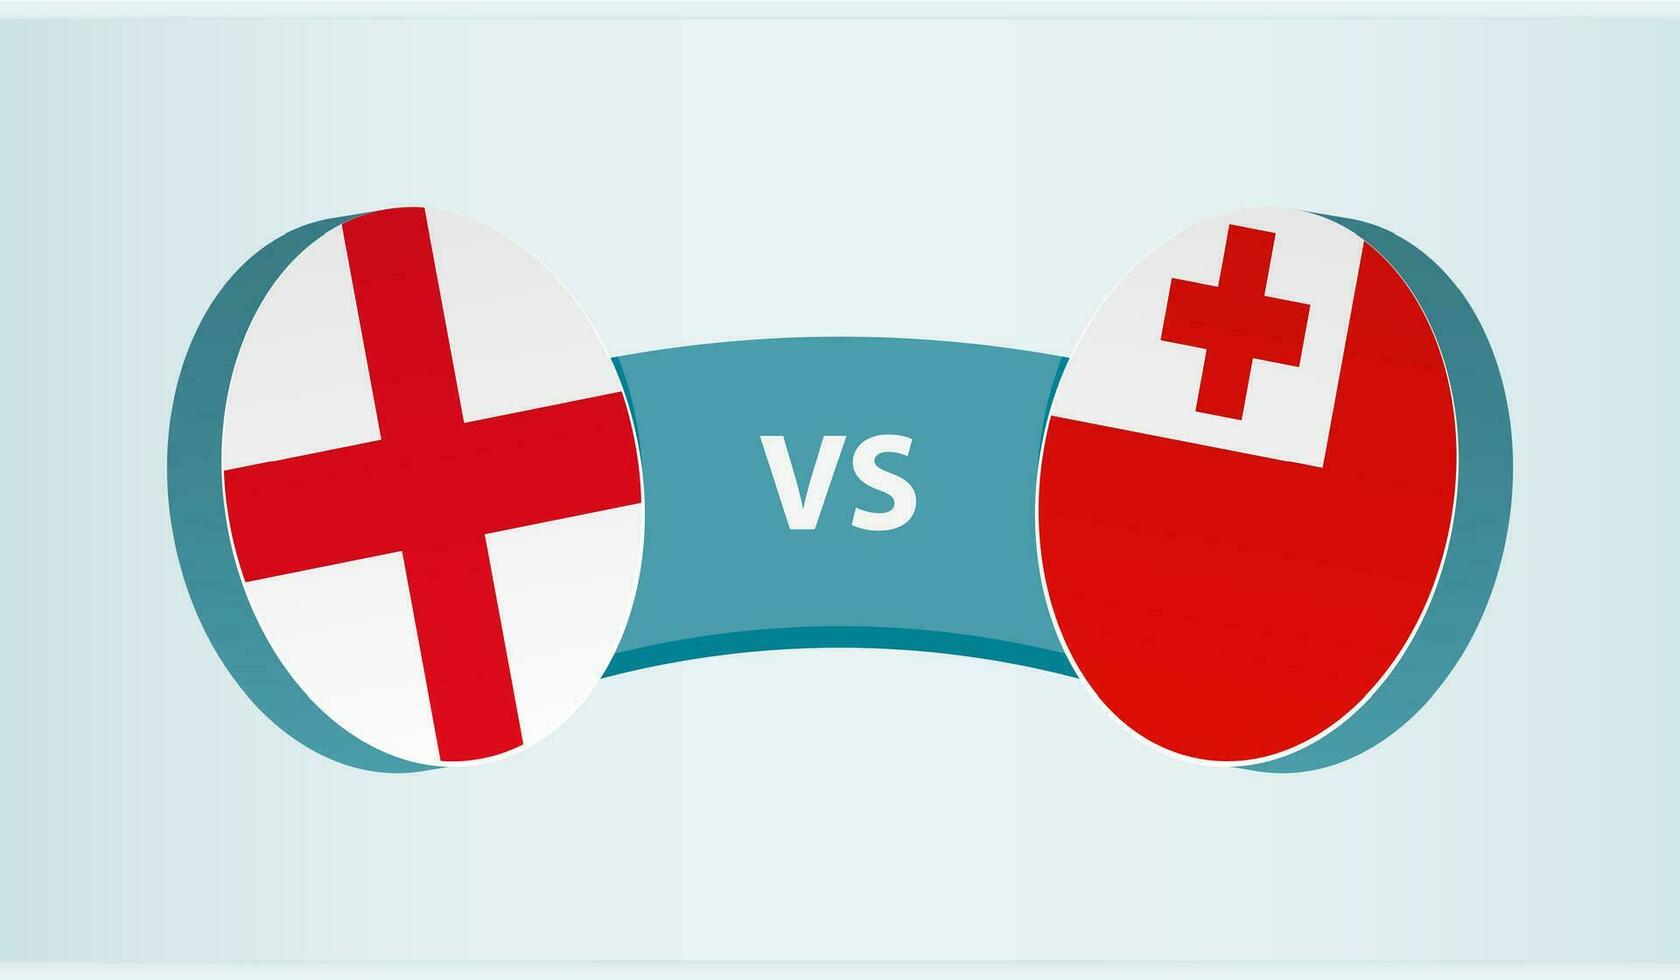 Inglaterra versus tonga, equipe Esportes concorrência conceito. vetor